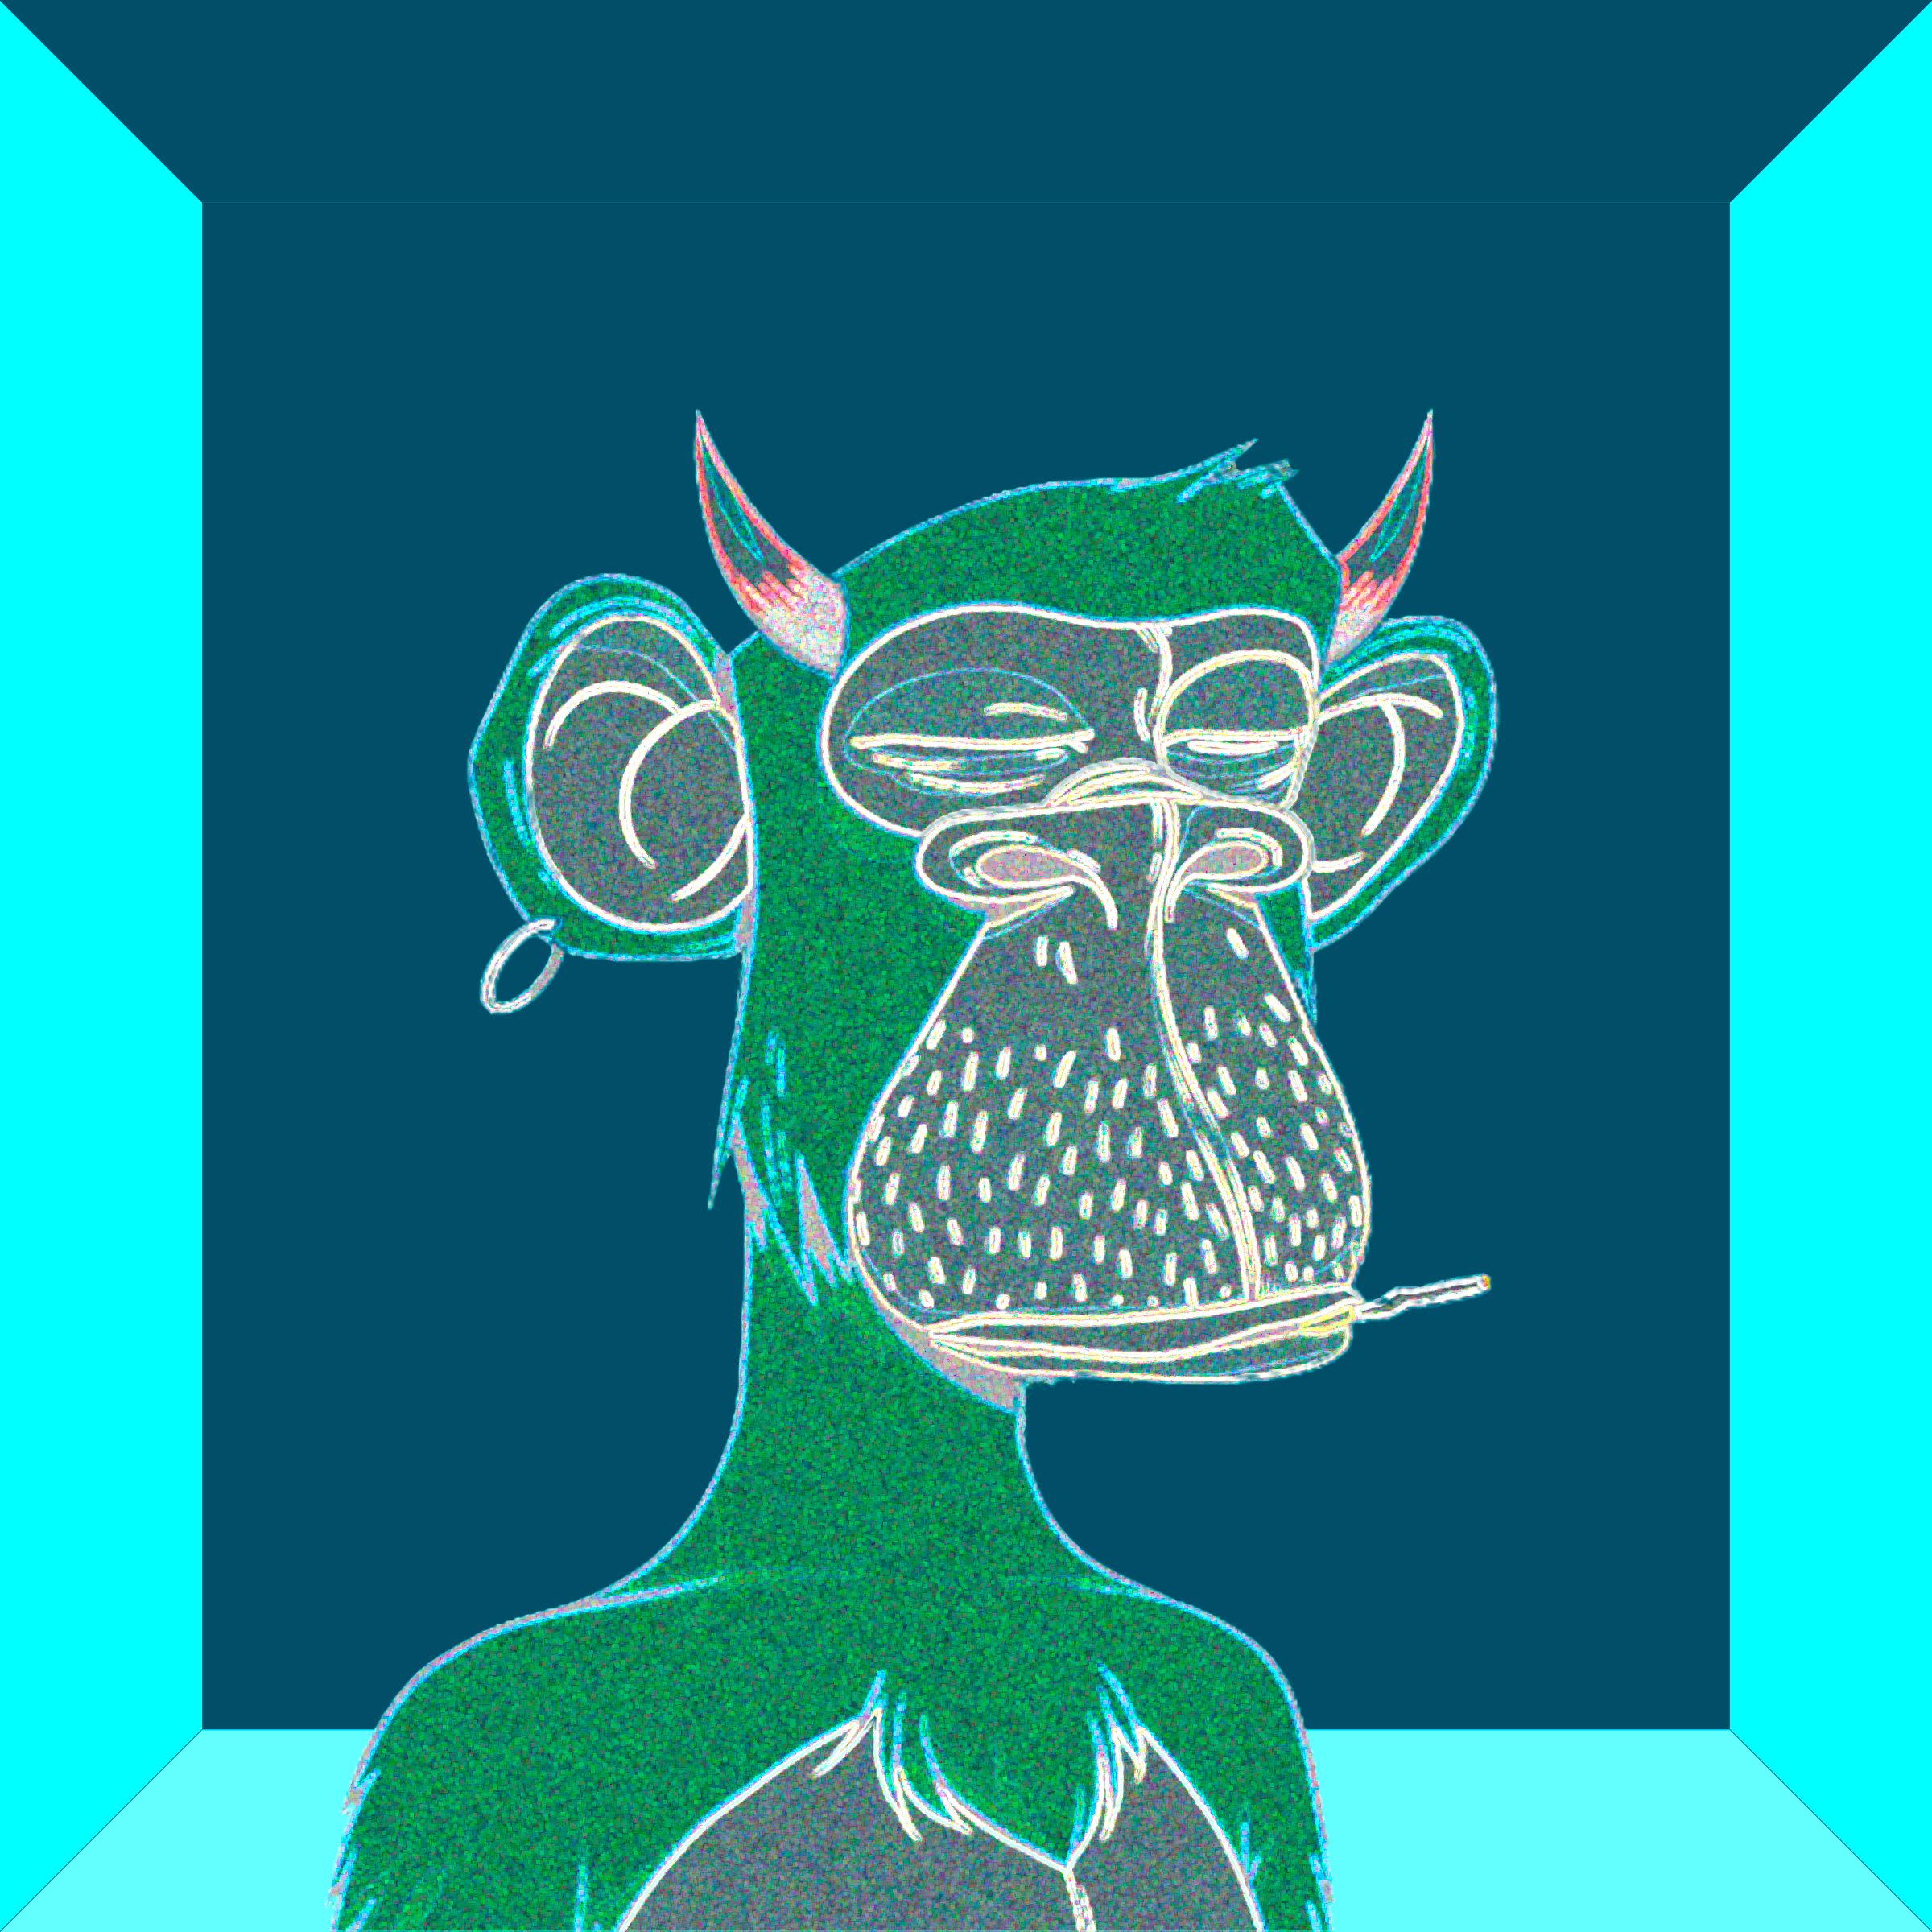 Neon Ape #4